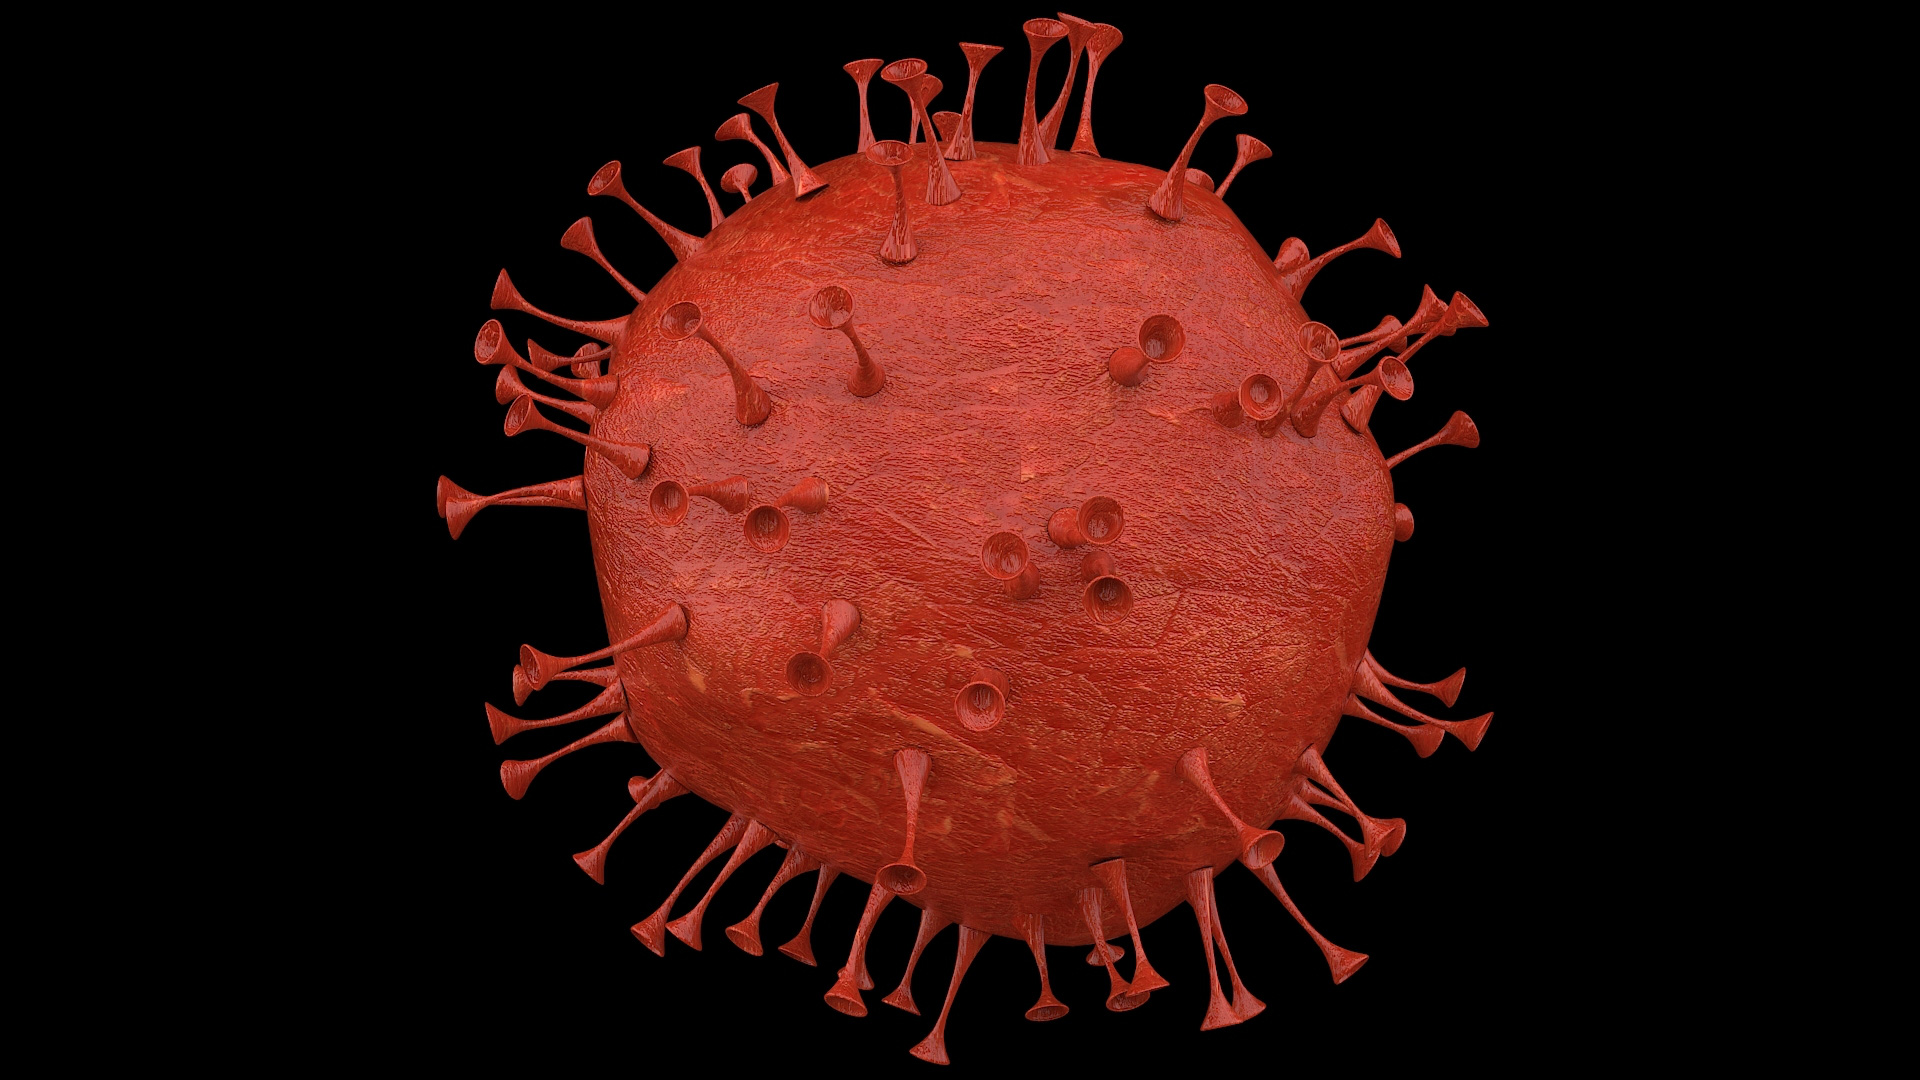 lam-gi-de-phong-tranh-va-bao-ve-tre-nho-truoc-nguy-co-lay-nhiem-virus-corona-2